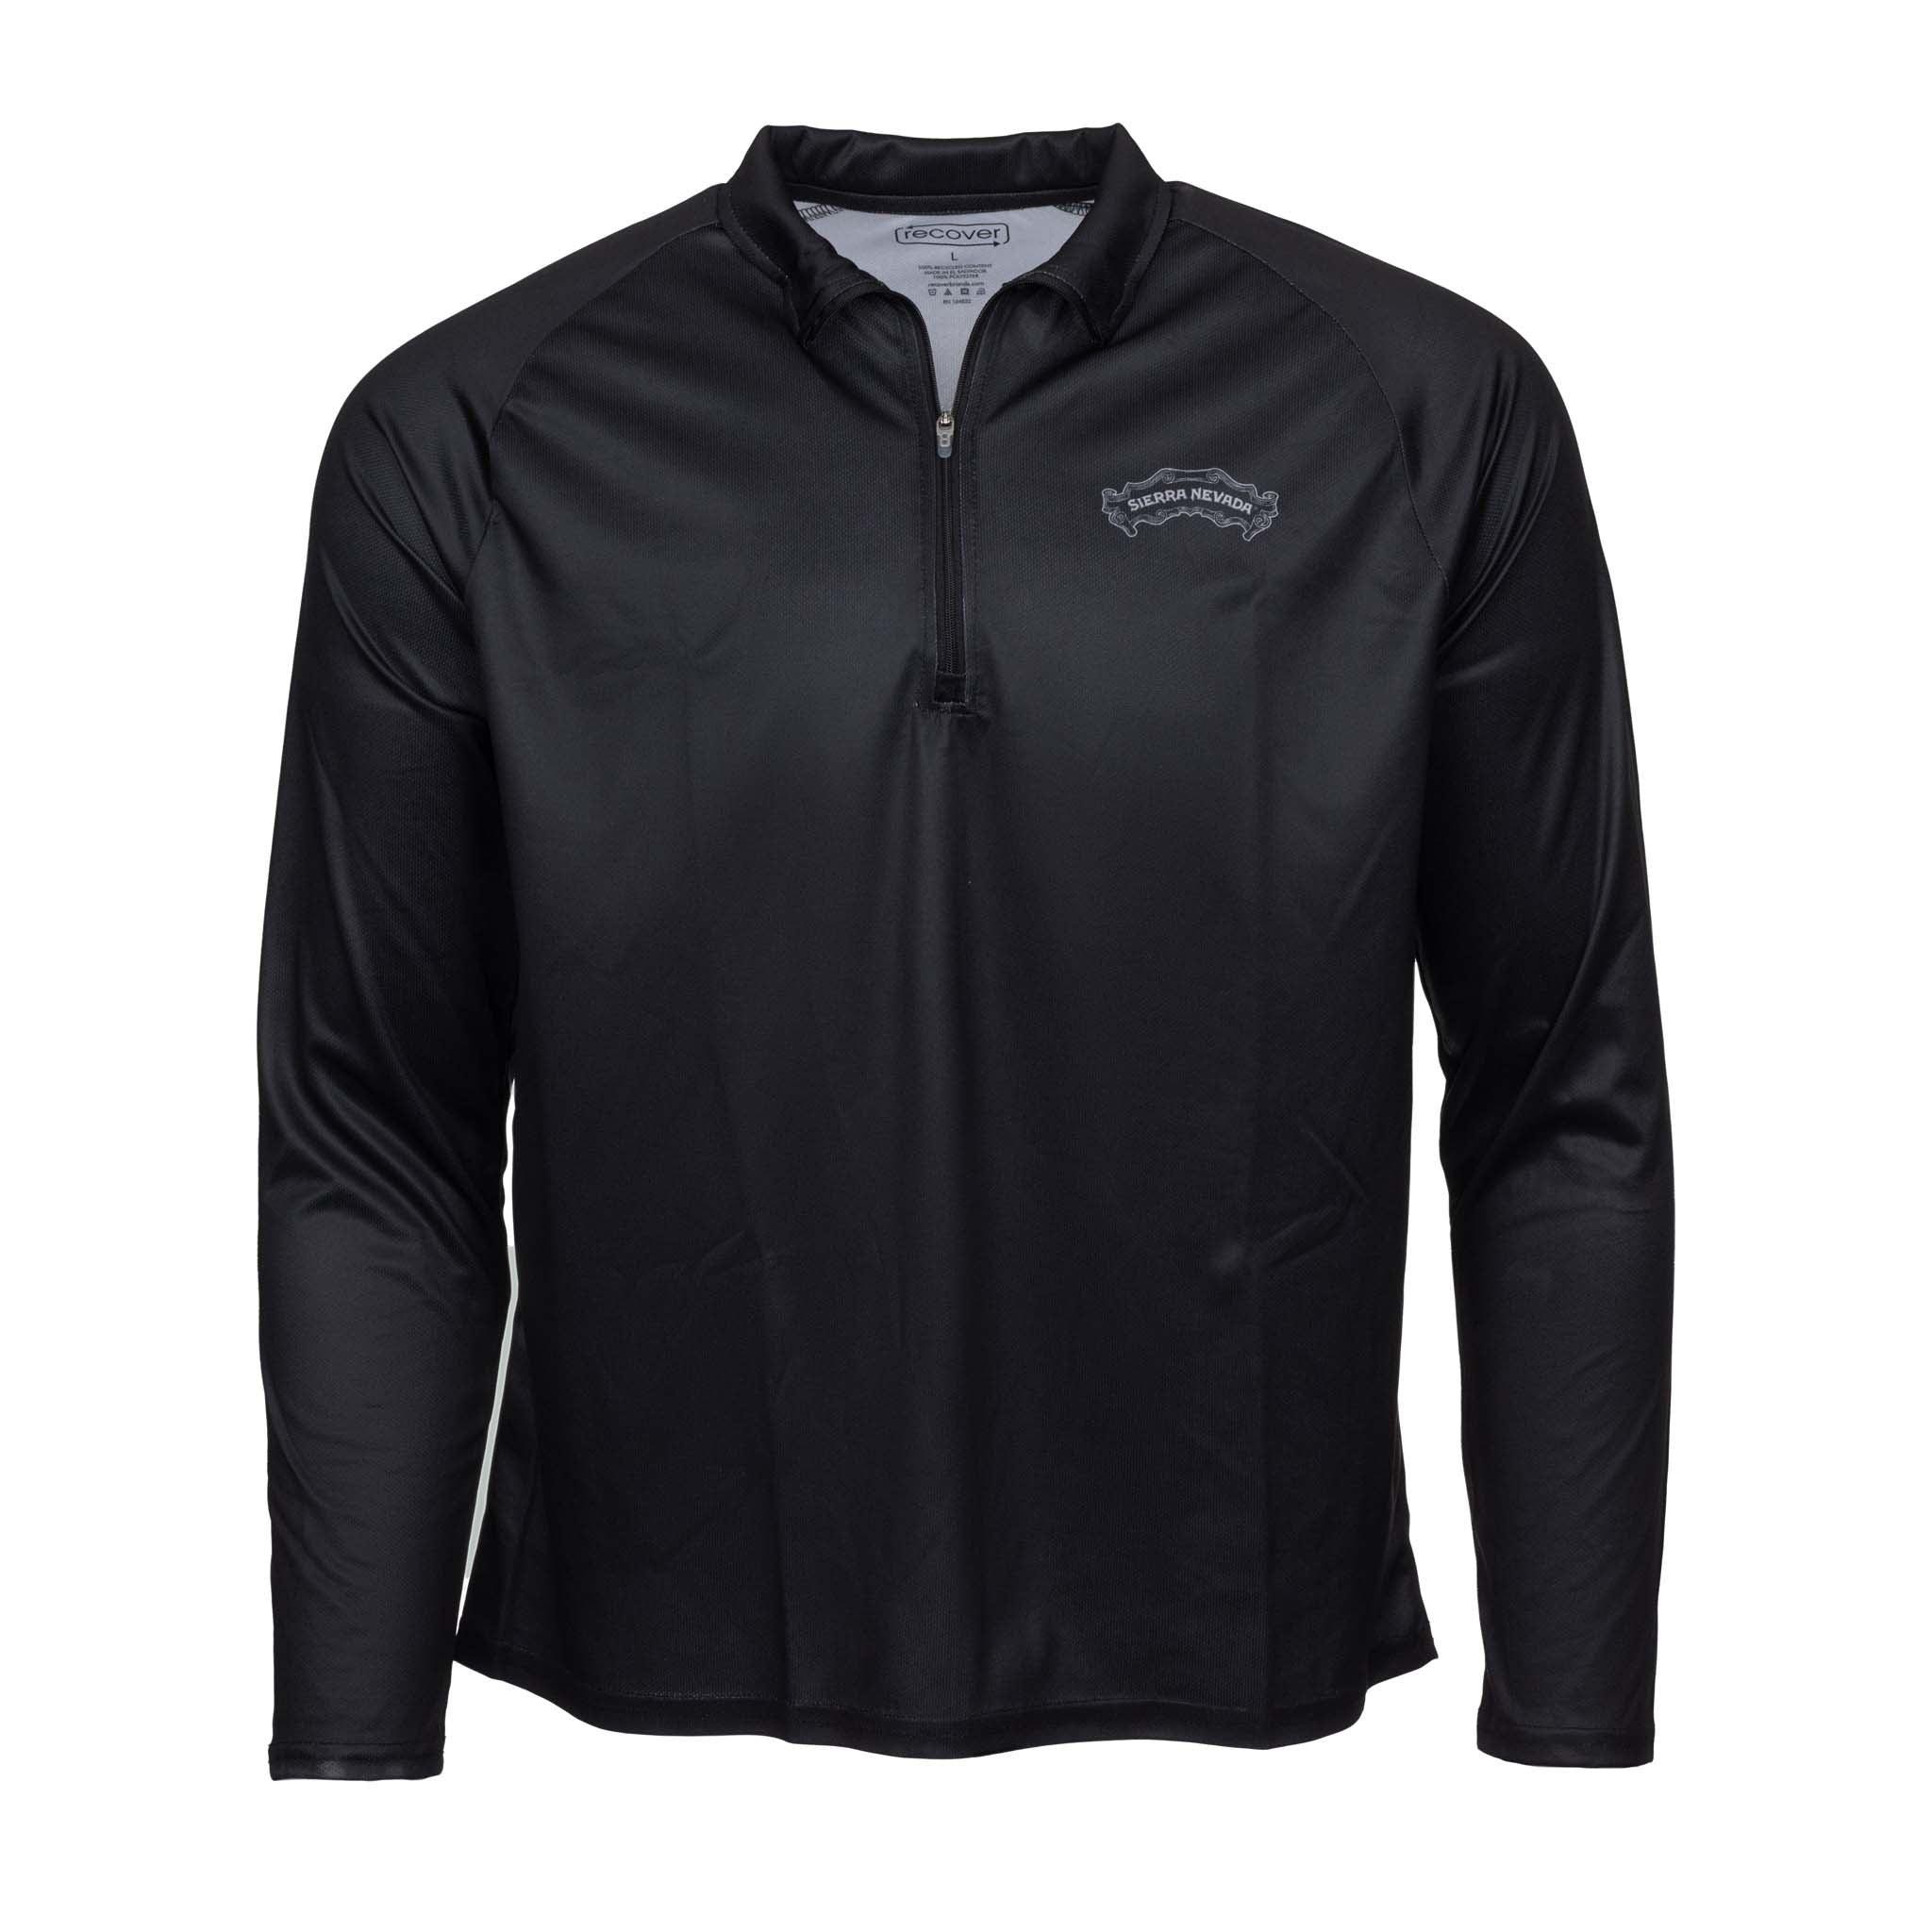 Recover Sport 1/4 Zip Black Pullover - XL